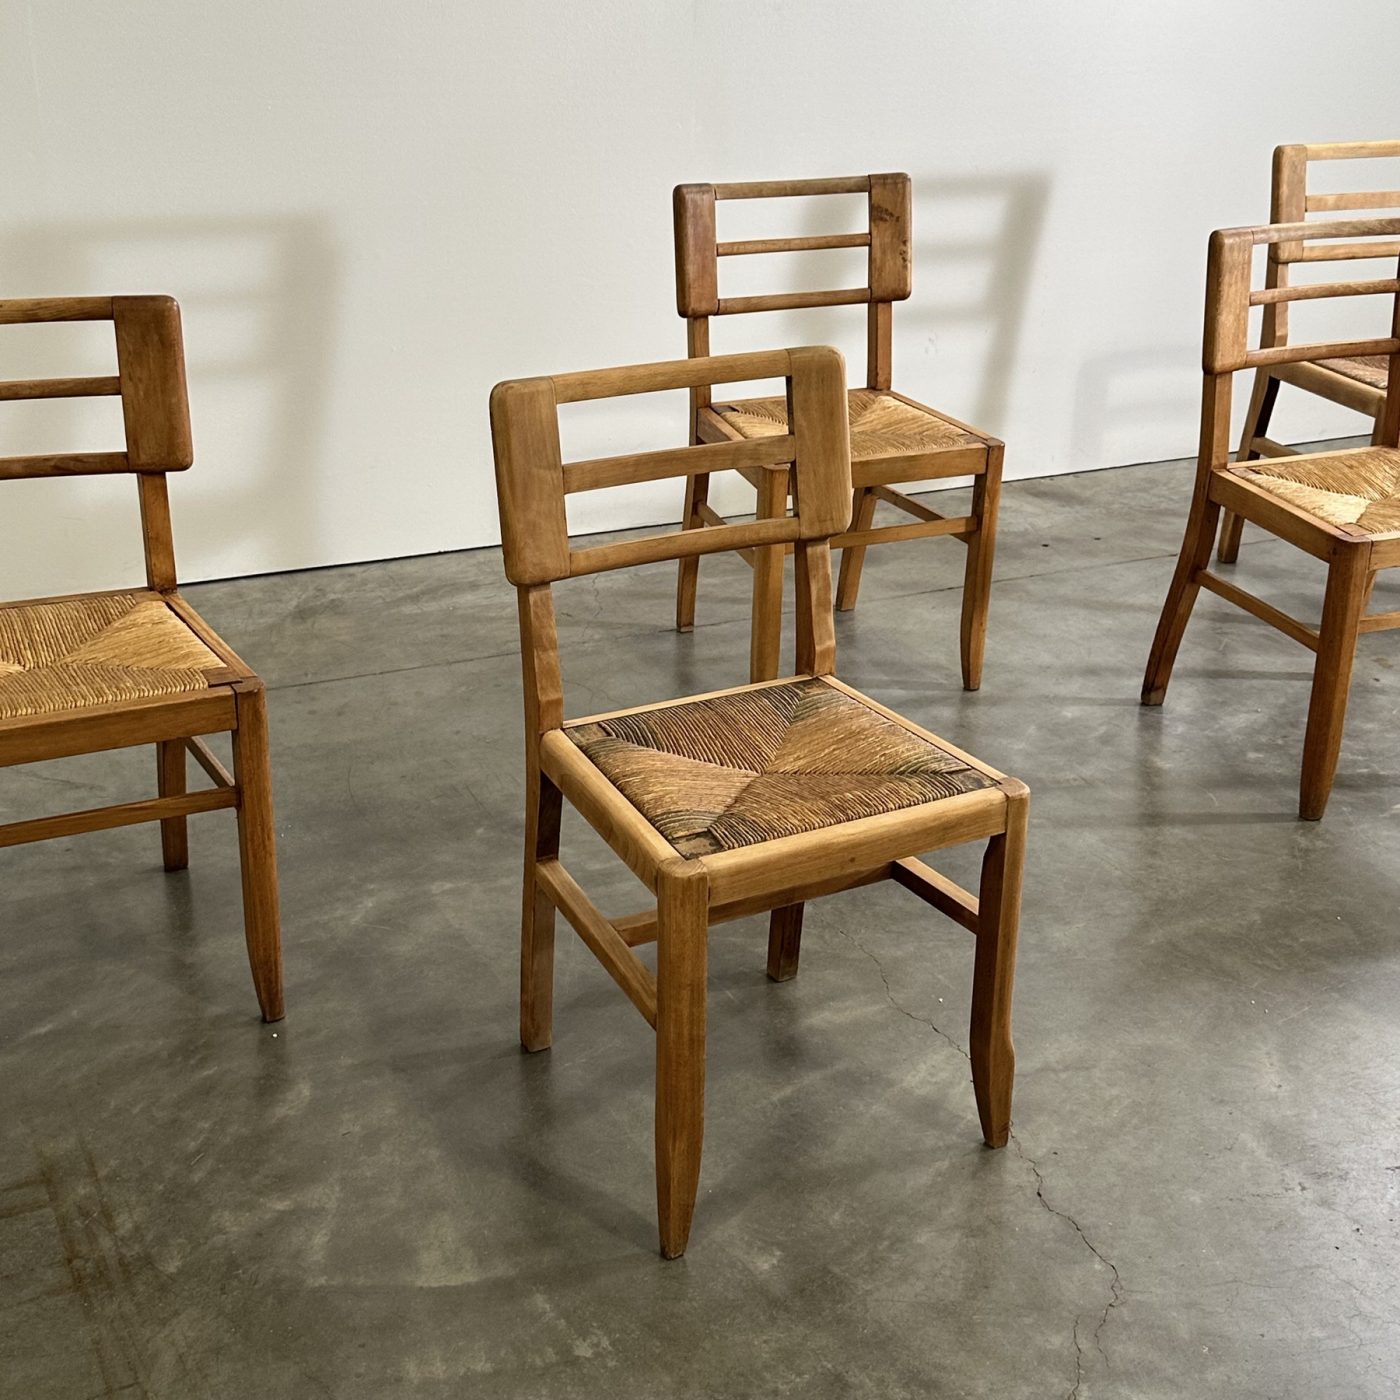 objet-vagabond-cruege-chairs0003